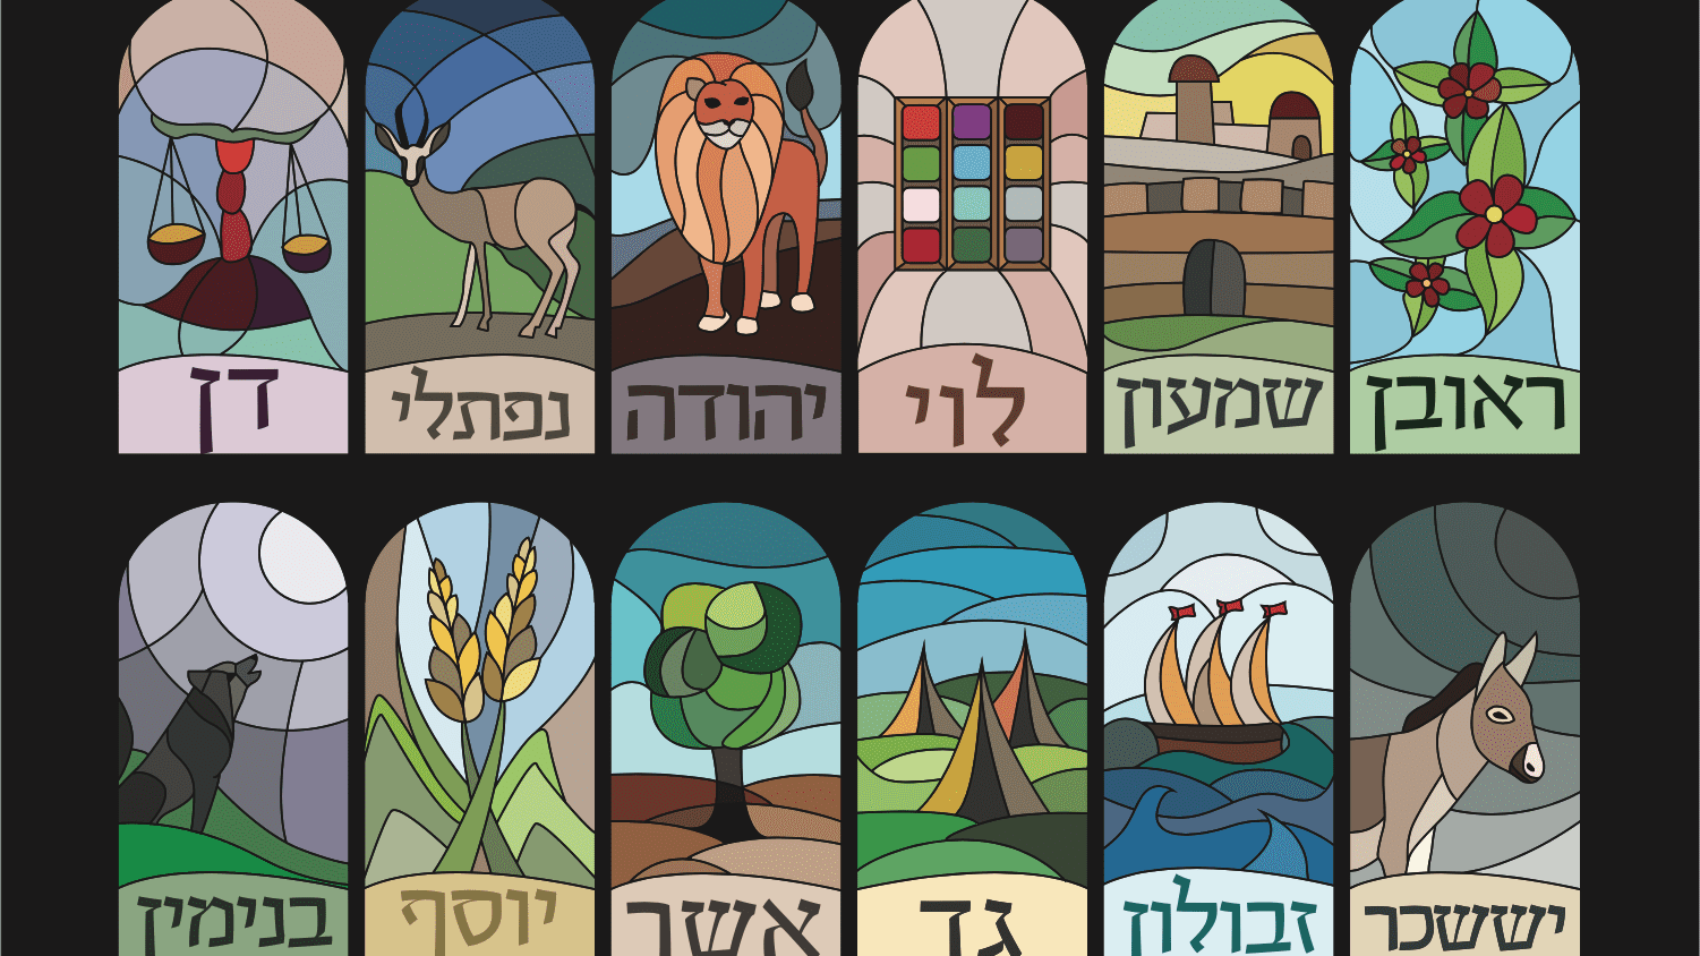 Emblemas de las Doce Tribus: Fila superior: Dan, Naftali, Yahudáh, Leví, Shimeon, Rubén Fila inferior: Benjamín, Yosef, Asher, Gad, Zebulún, Isacar